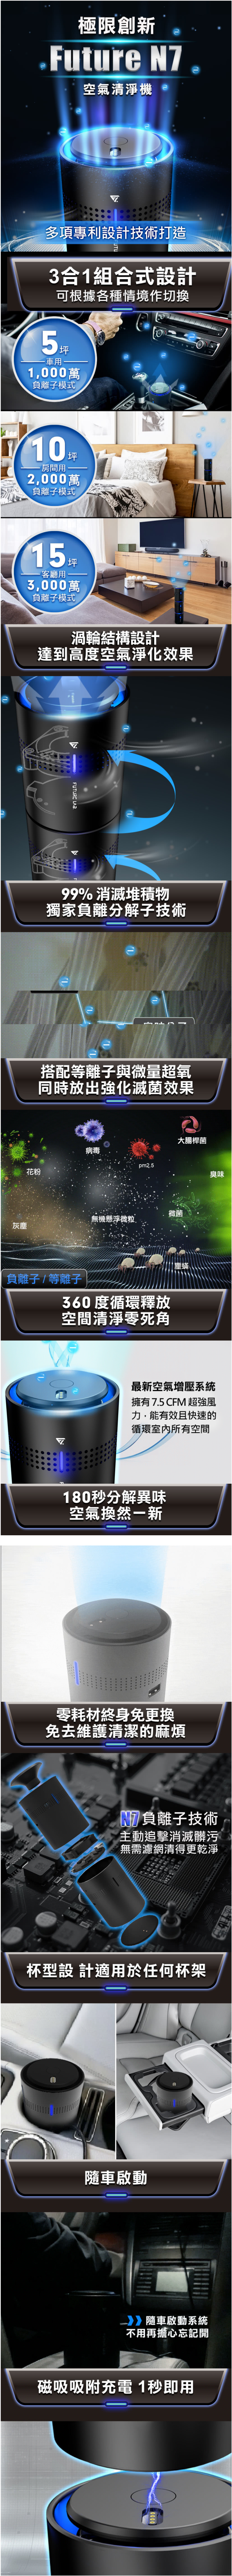 Futurelab 未來實驗室n7 空氣清淨機 Isunfar愛順發3c購物網